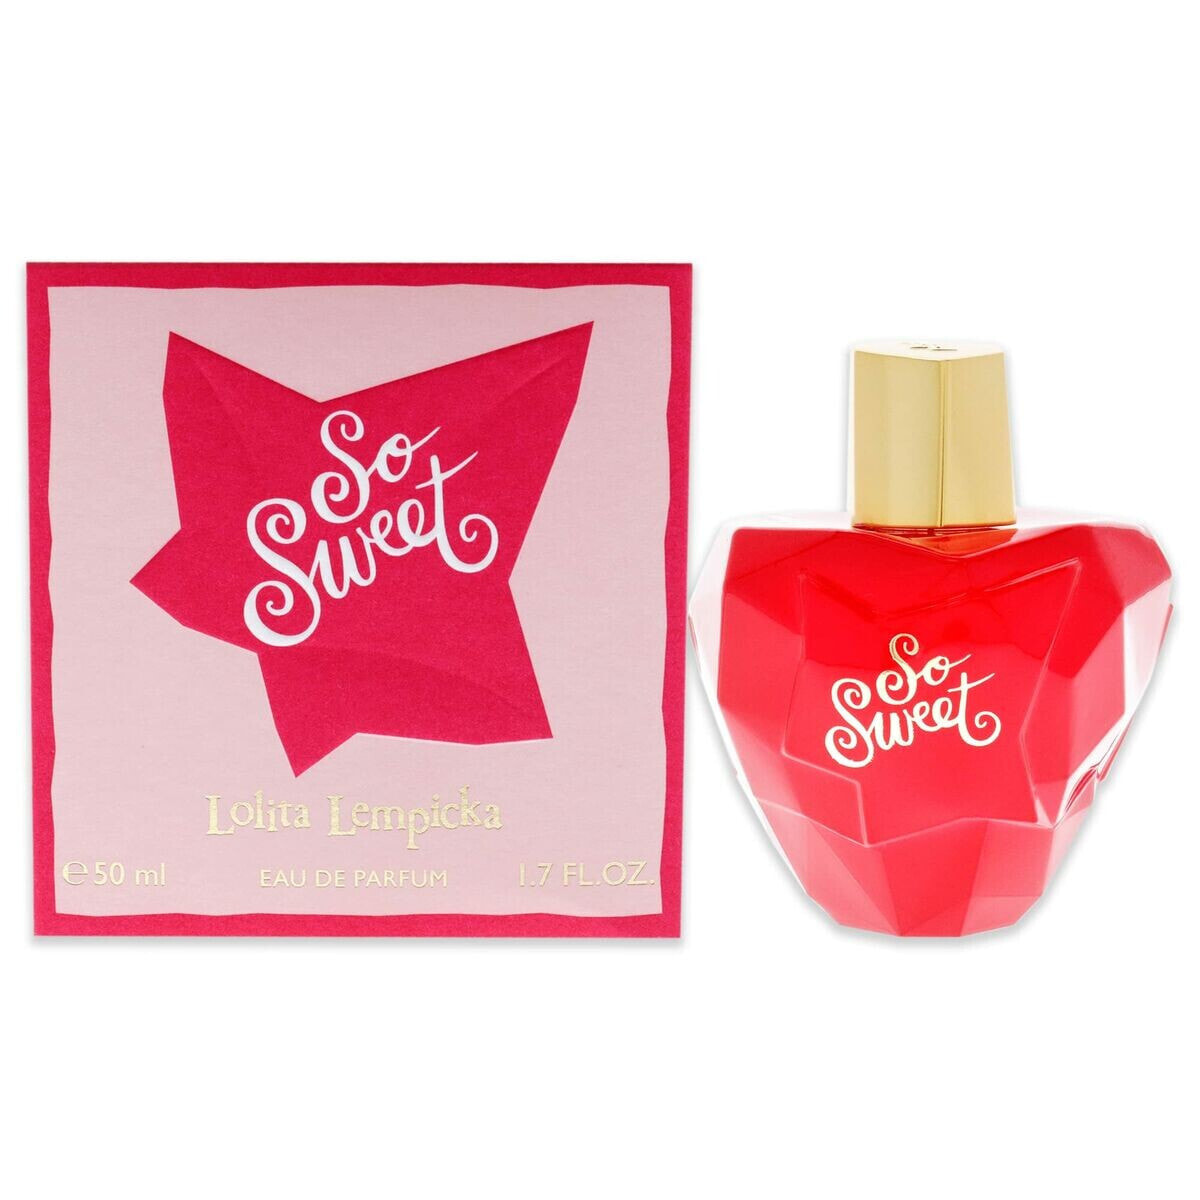 Женская парфюмерия EDP Lolita Lempicka So Sweet 50 ml